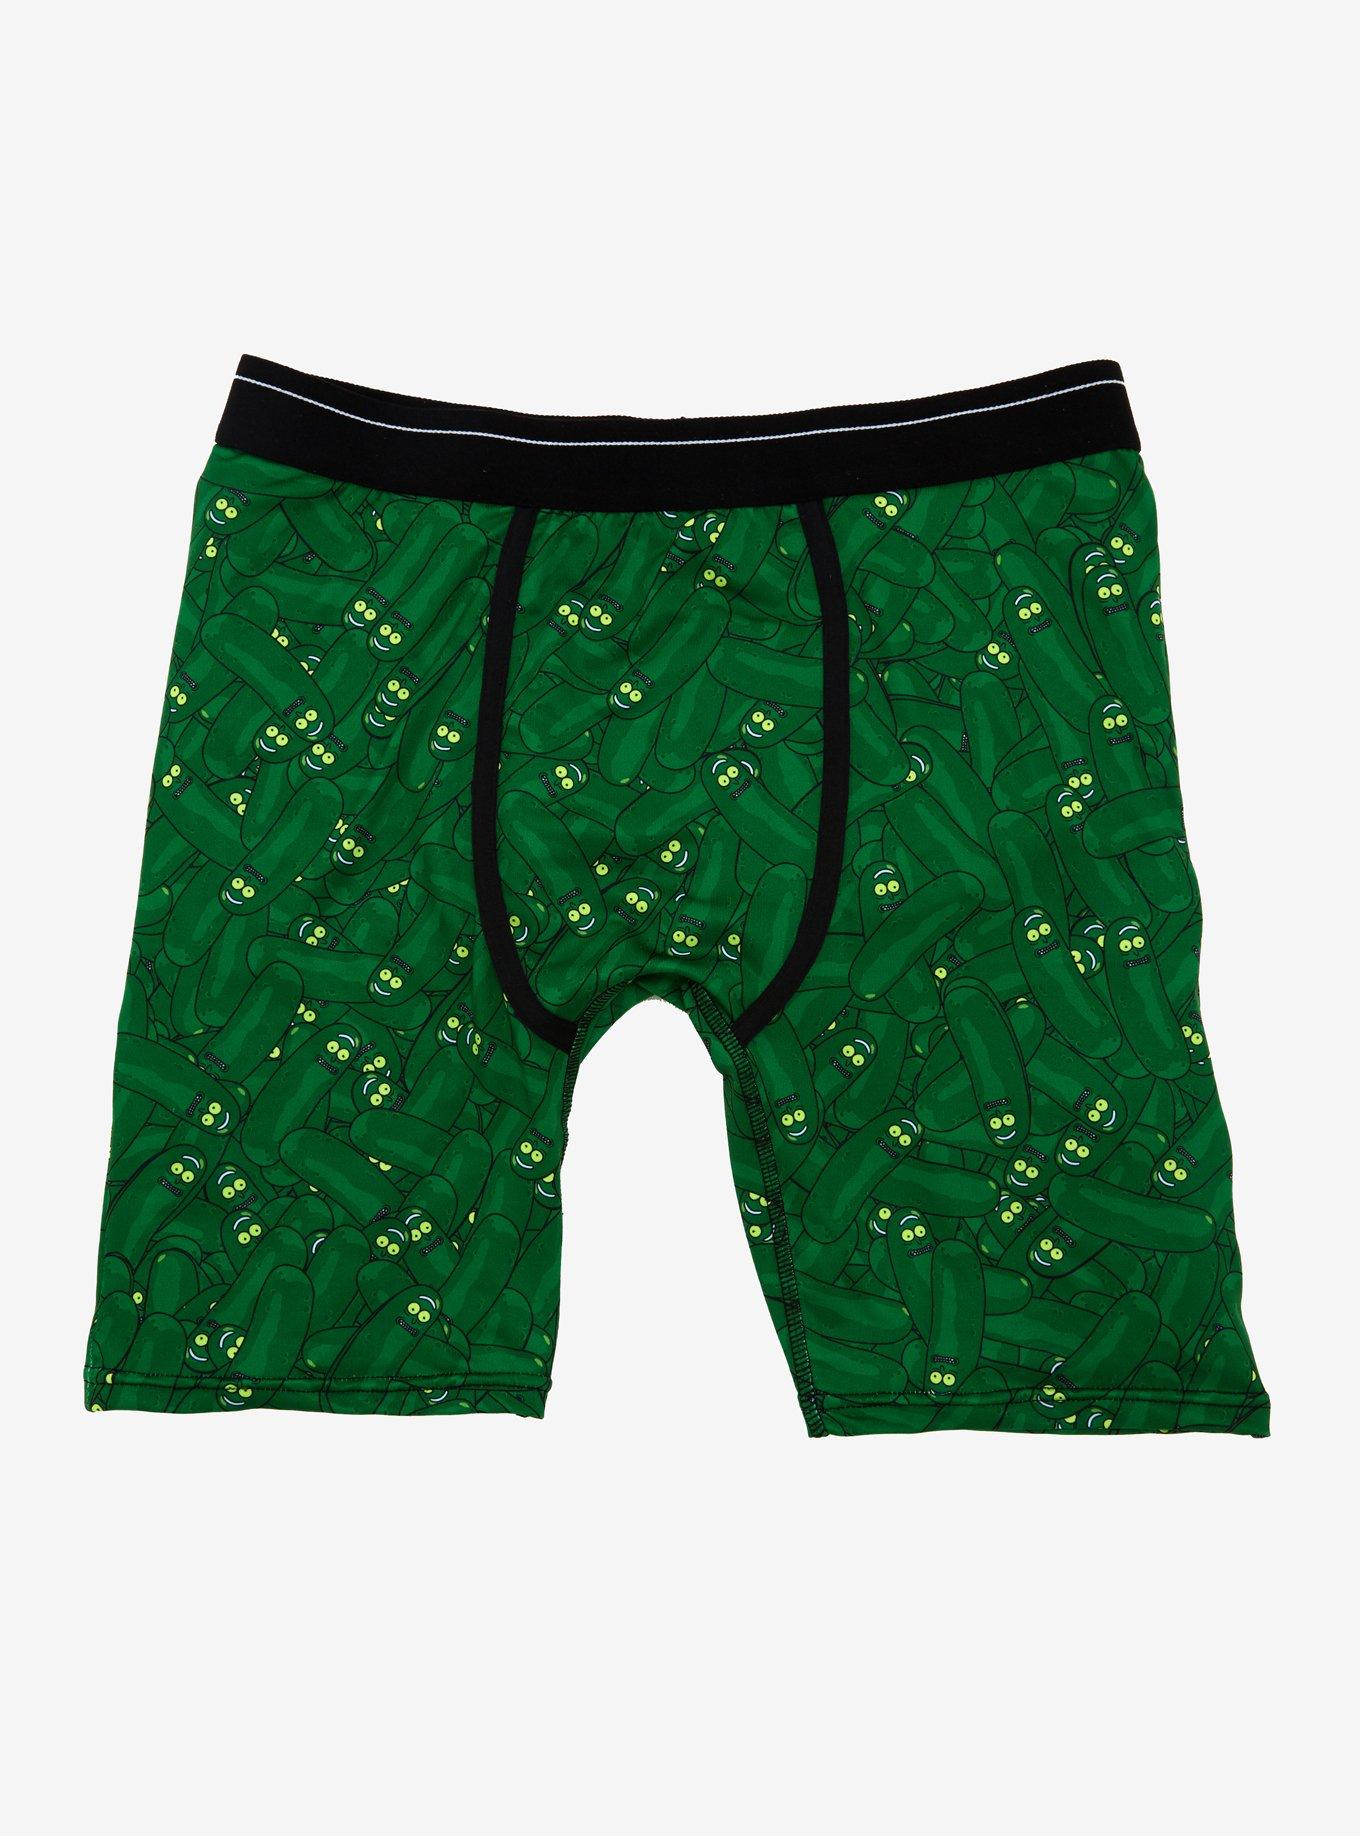 PSD Underwear Men's Rick and Morty Classic Boxer Brief, Green - Salesman  Rick's